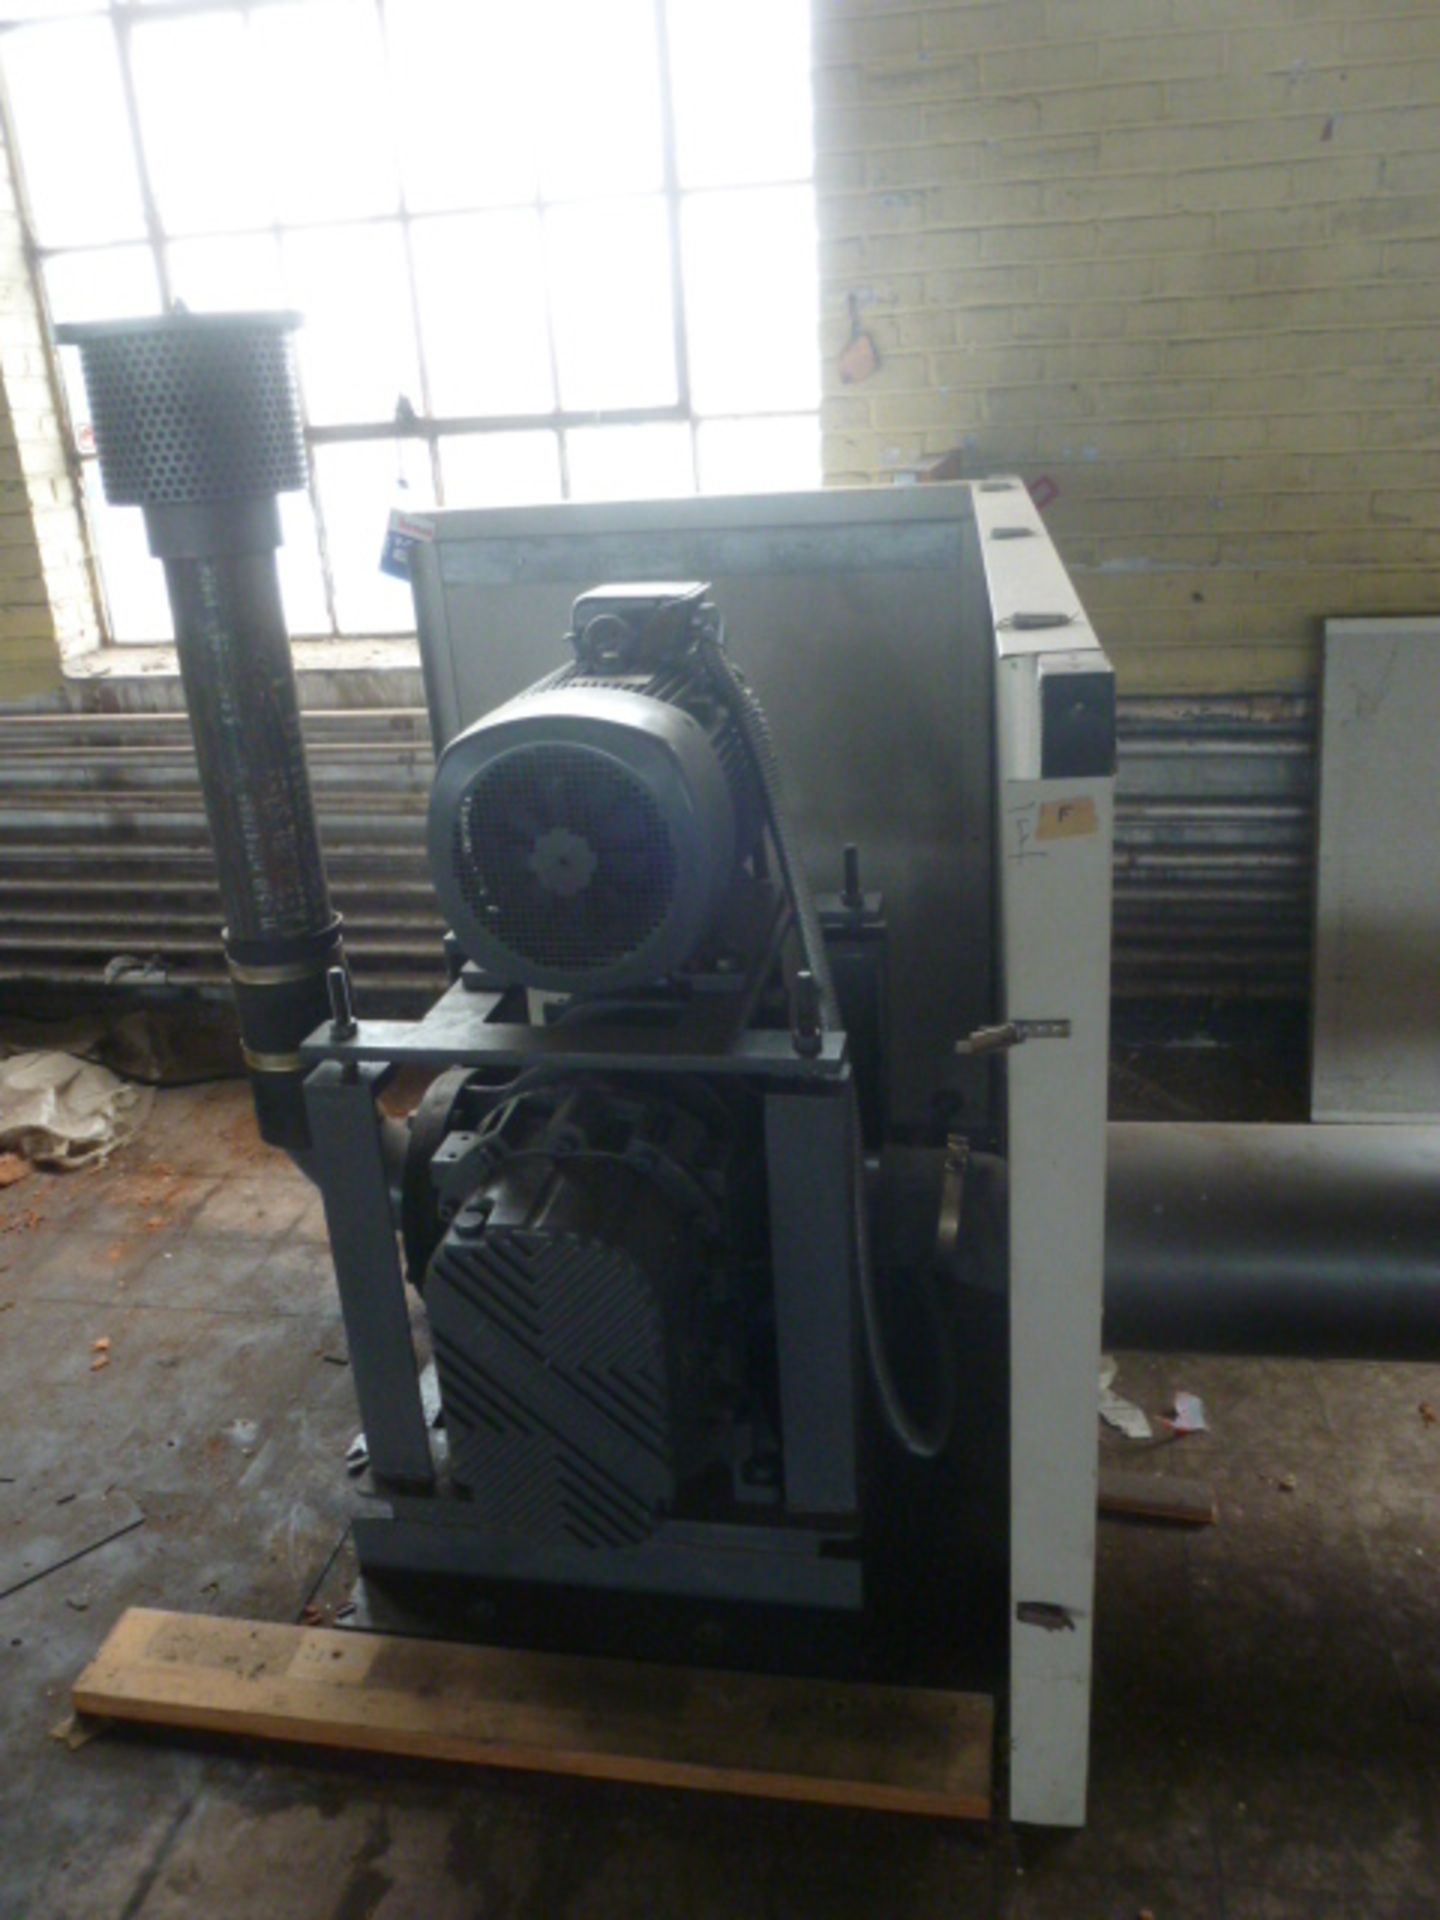 Flamar Italia Buffing Machine, m/n SG3000, s/n 10098 - Image 9 of 9